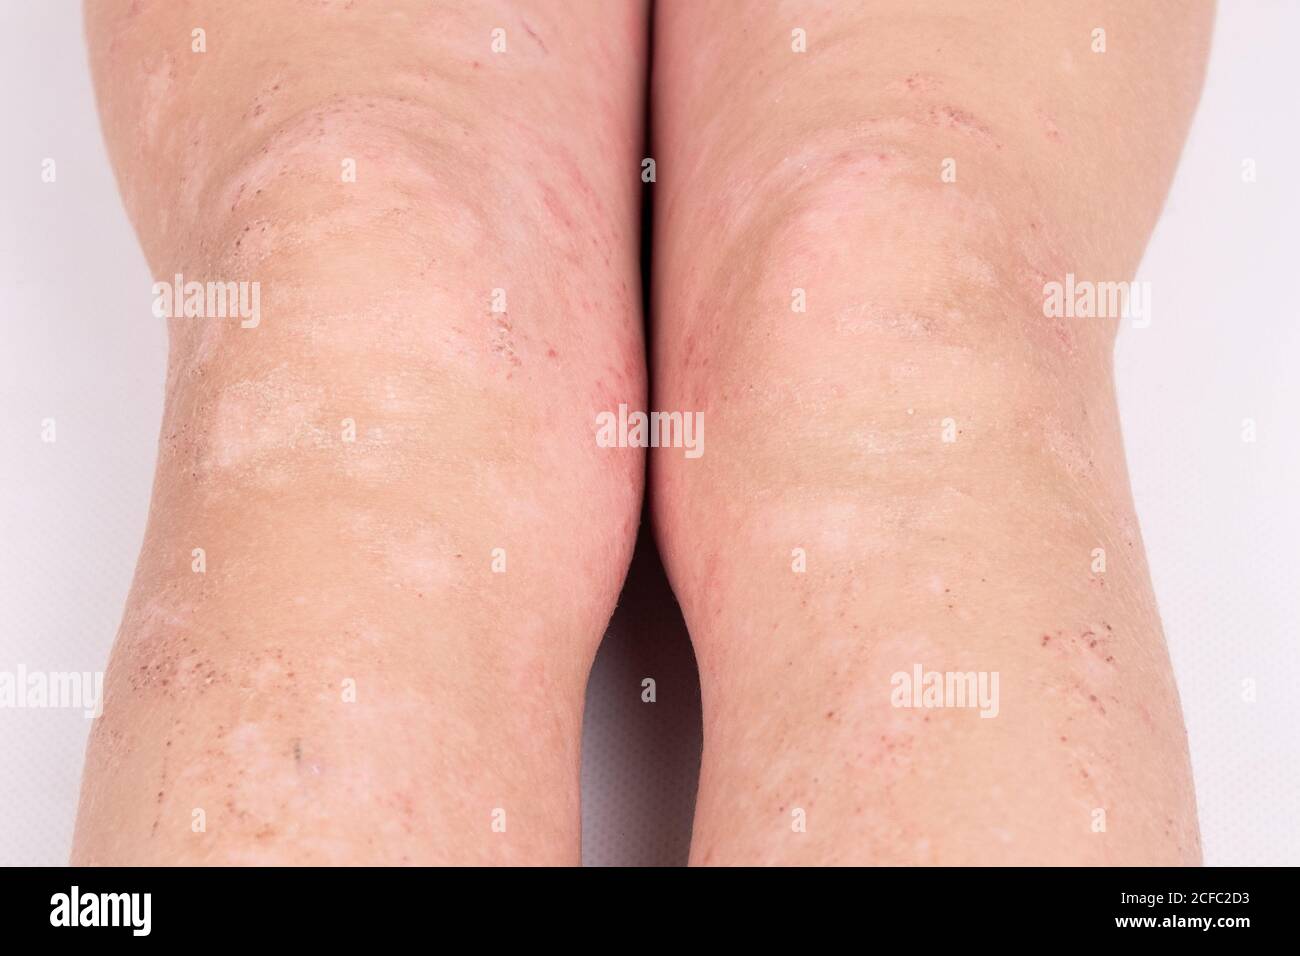 rash on children's legs close-up, redness of the skin, allergic reaction. Stock Photo